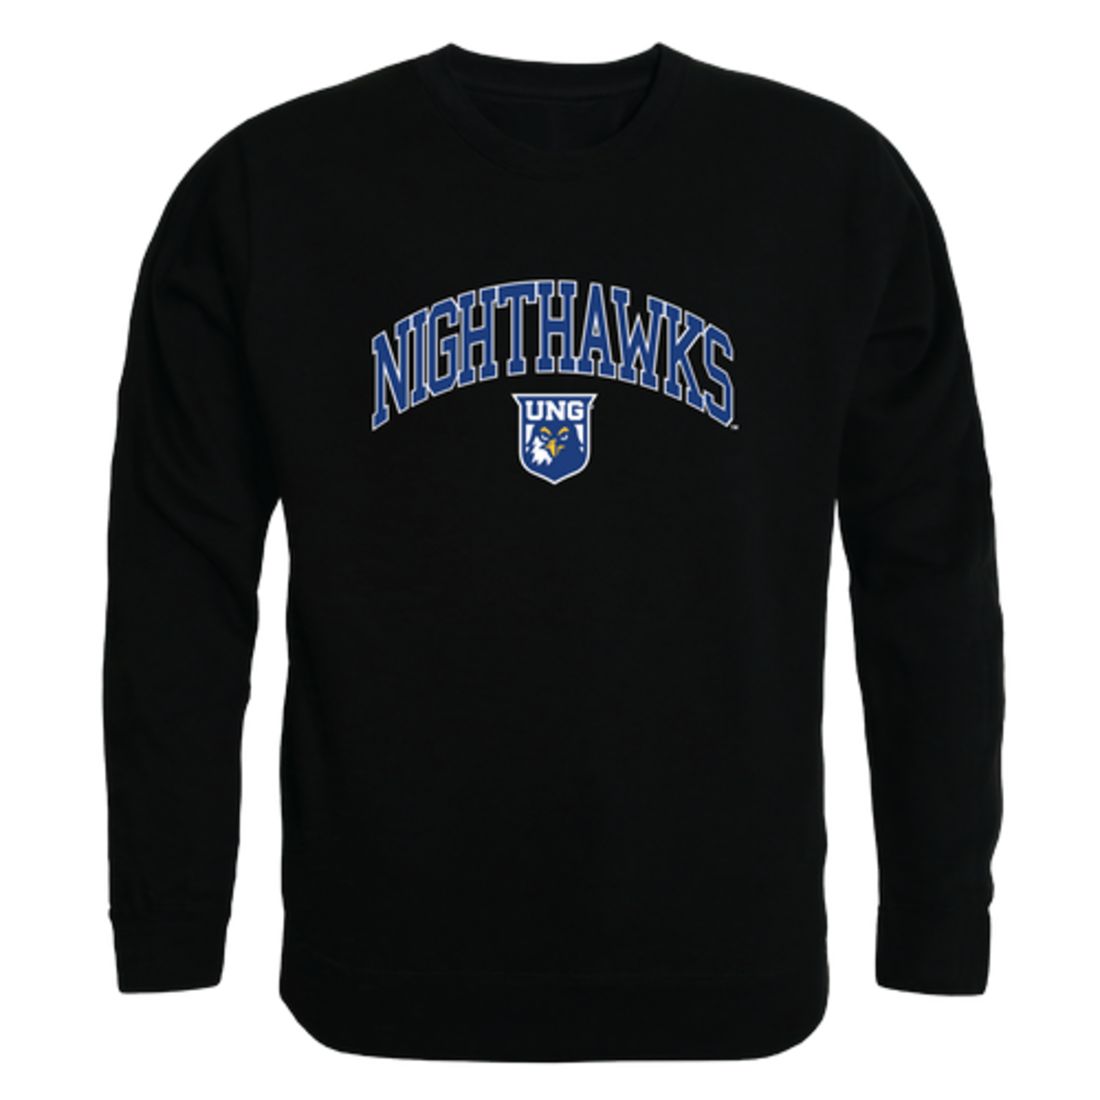 University-of-North-Georgia-Nighthawks-Campus-Fleece-Crewneck-Pullover-Sweatshirt